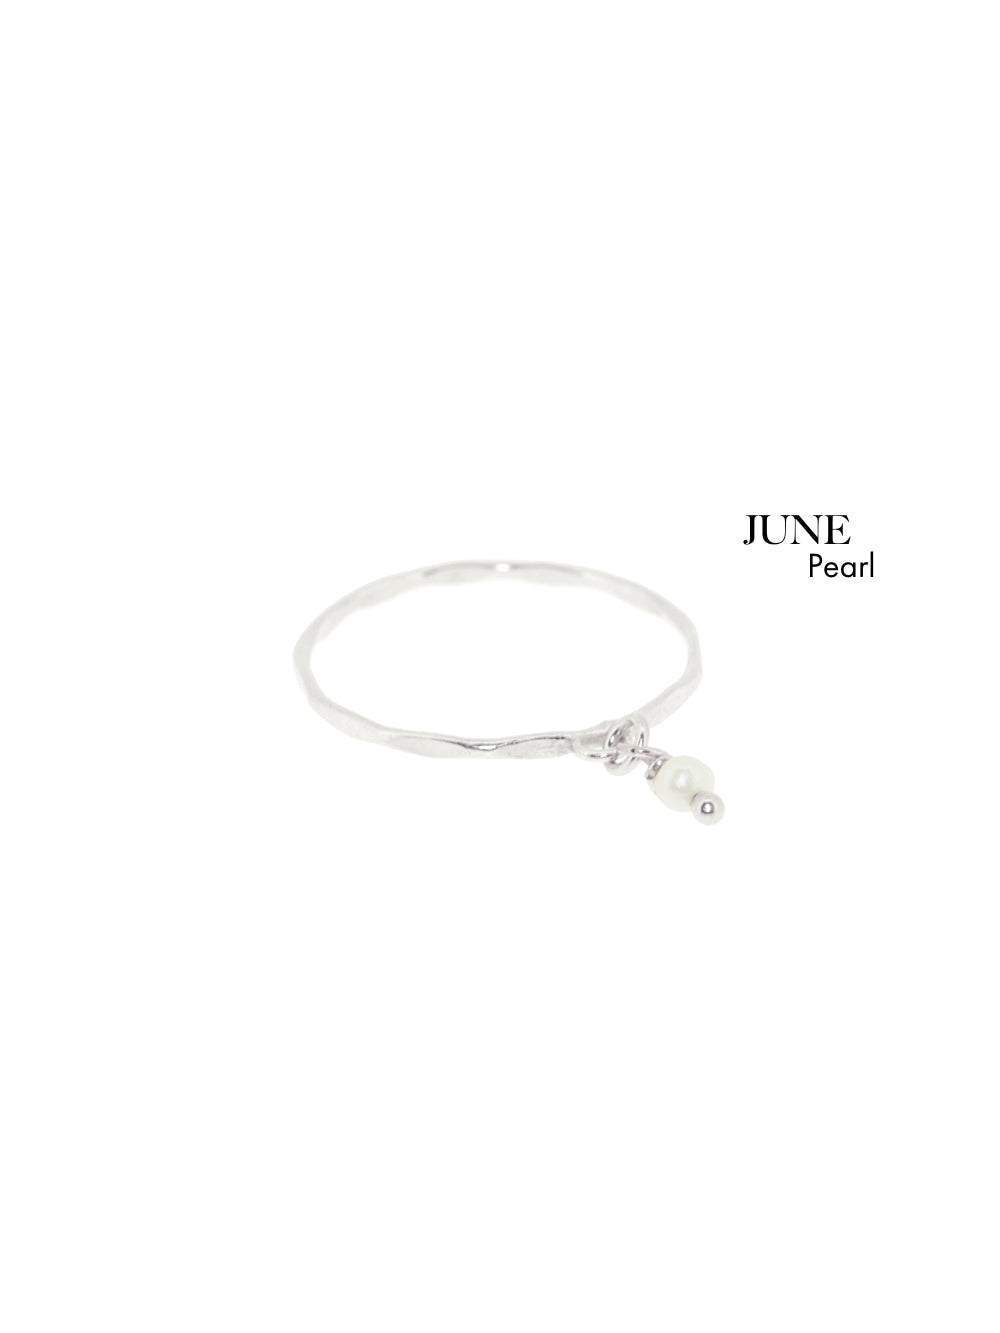 Birthstone ring June - Pearl | 925 Sterling Silver